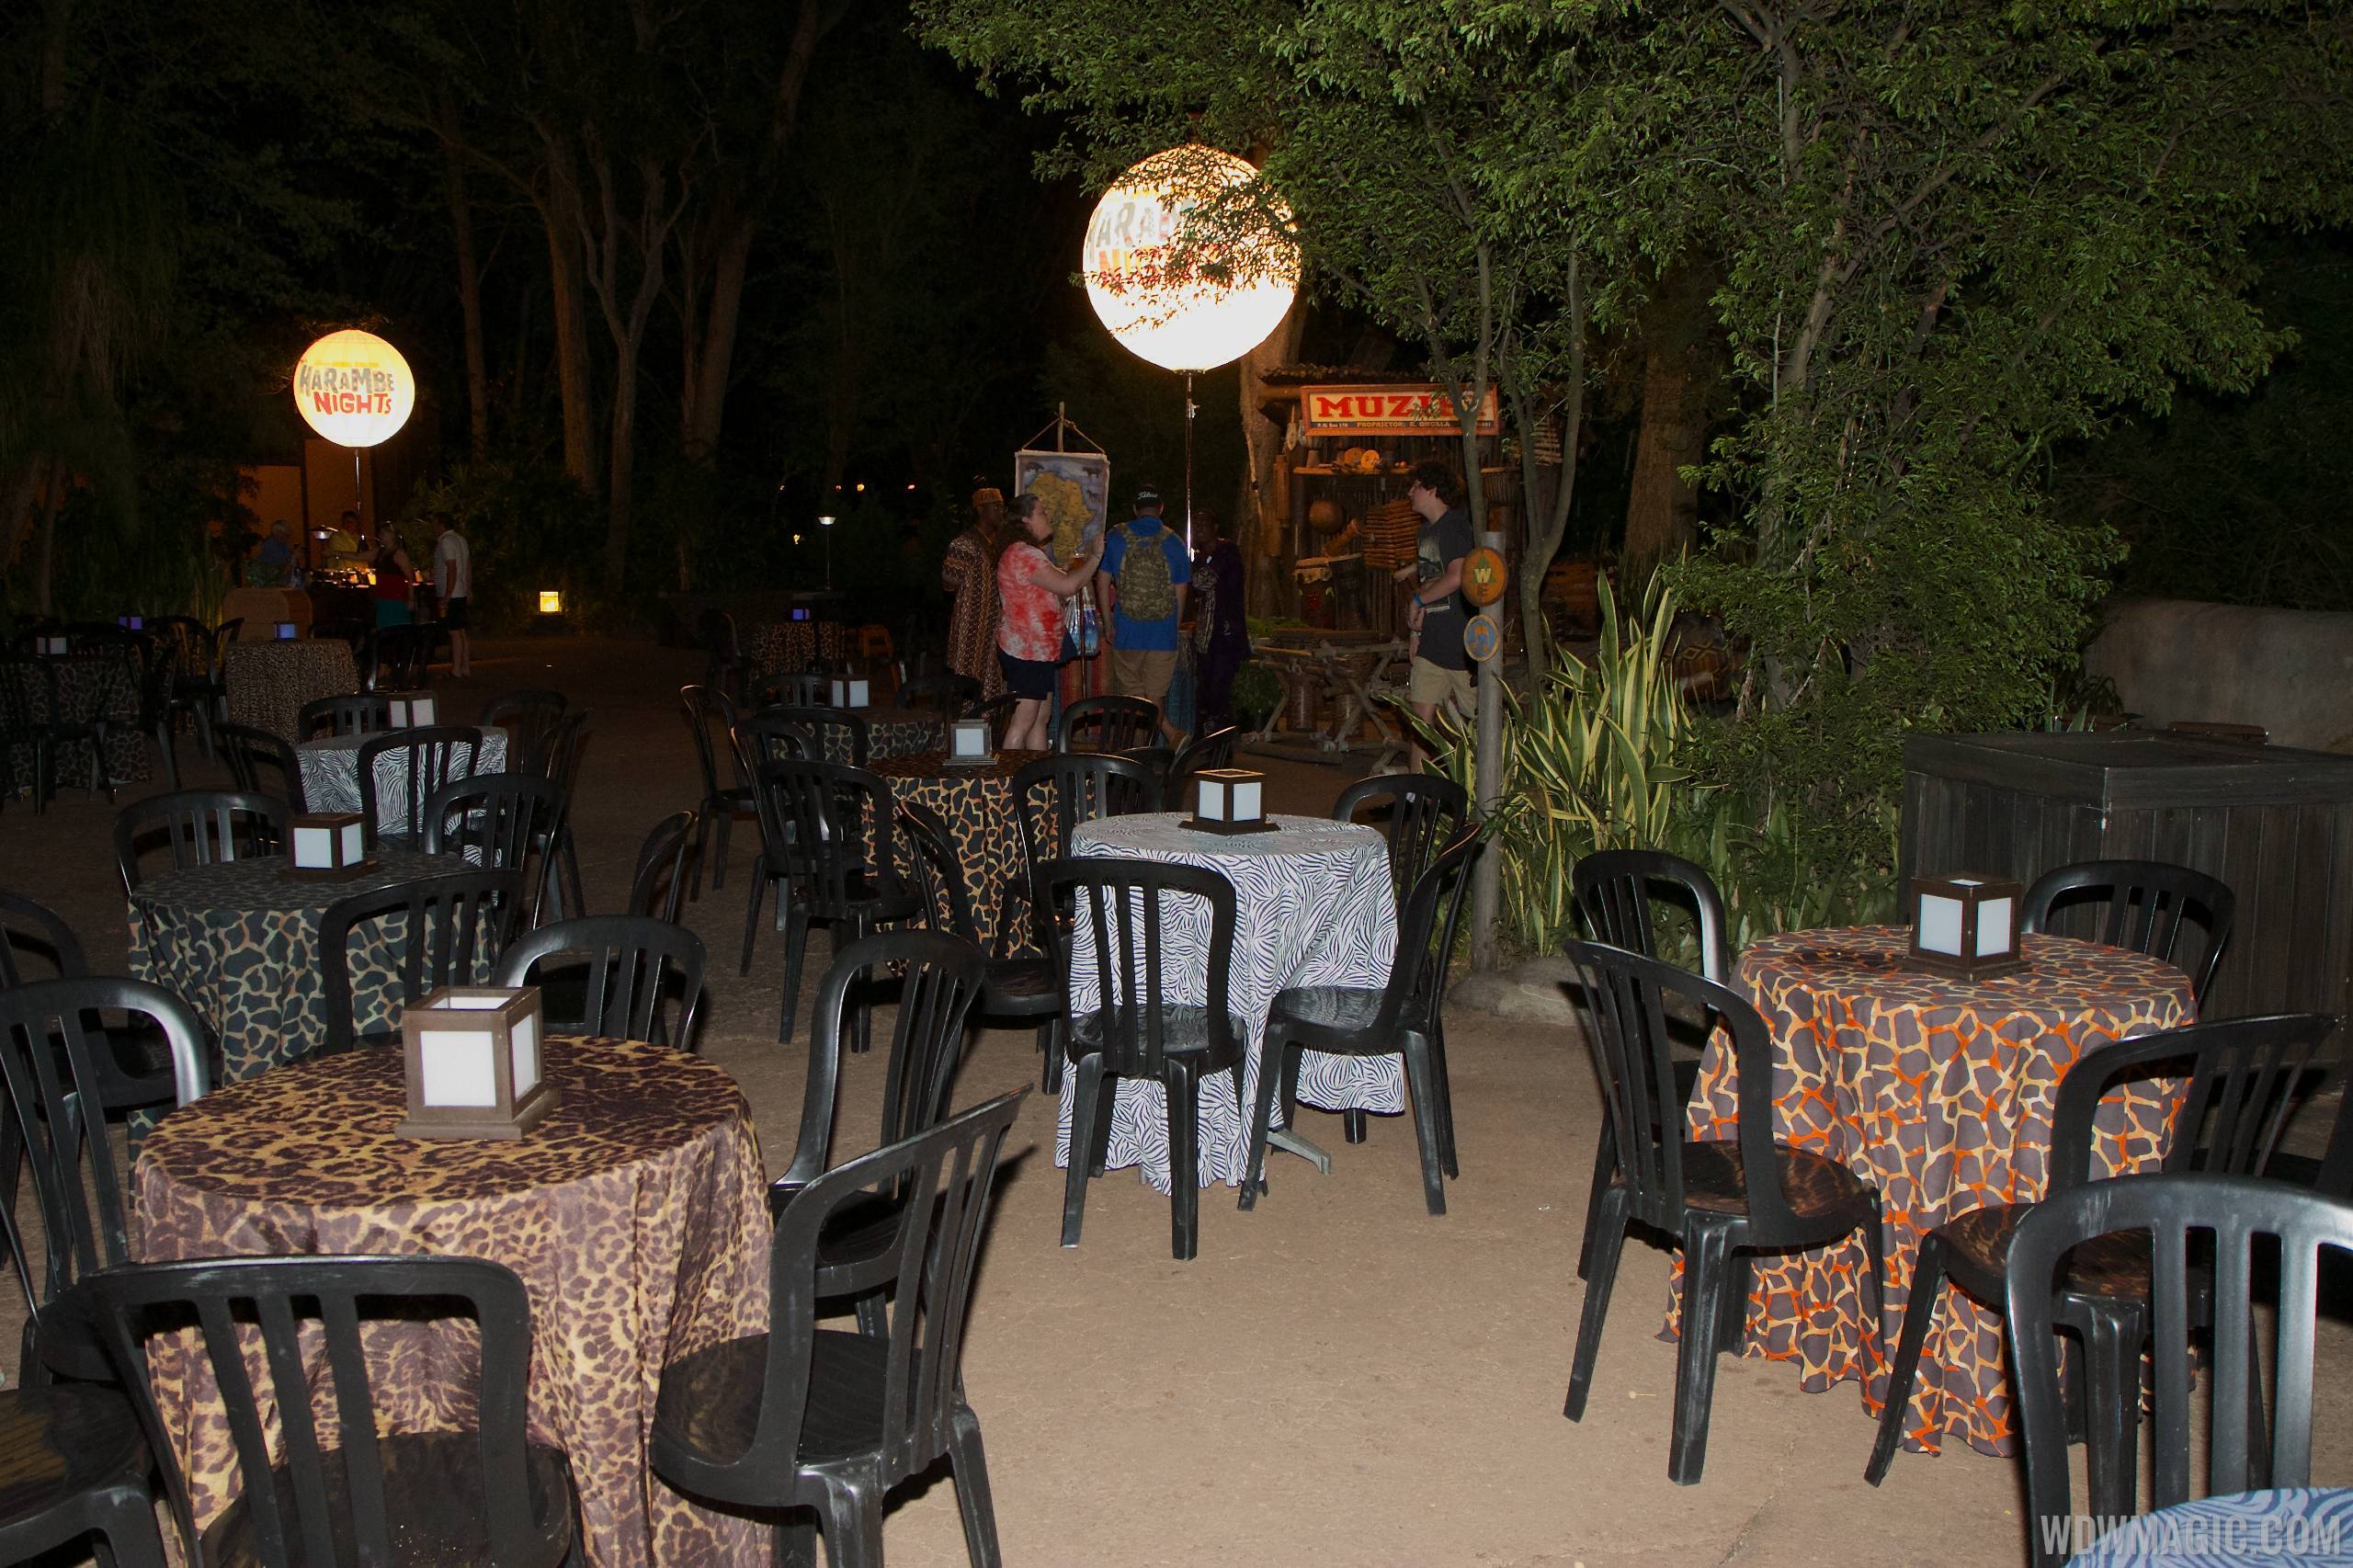 Harambe Nights - Outdoor seating stations